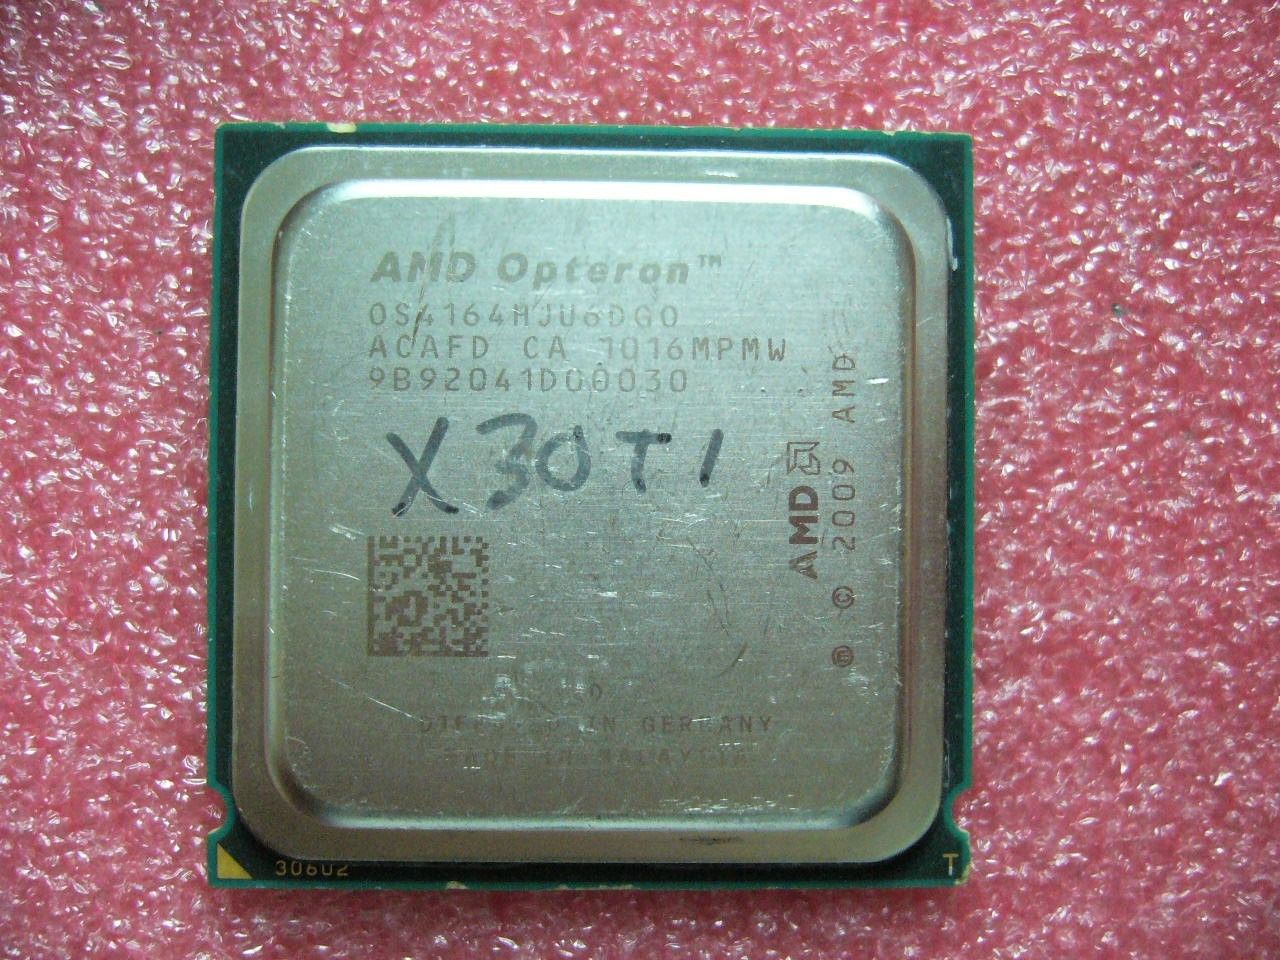 QTY 1x AMD Opteron 4164 EE 1.8 GHz Six Core (OS4164HJU6DGO) CPU Socket C32 - Click Image to Close